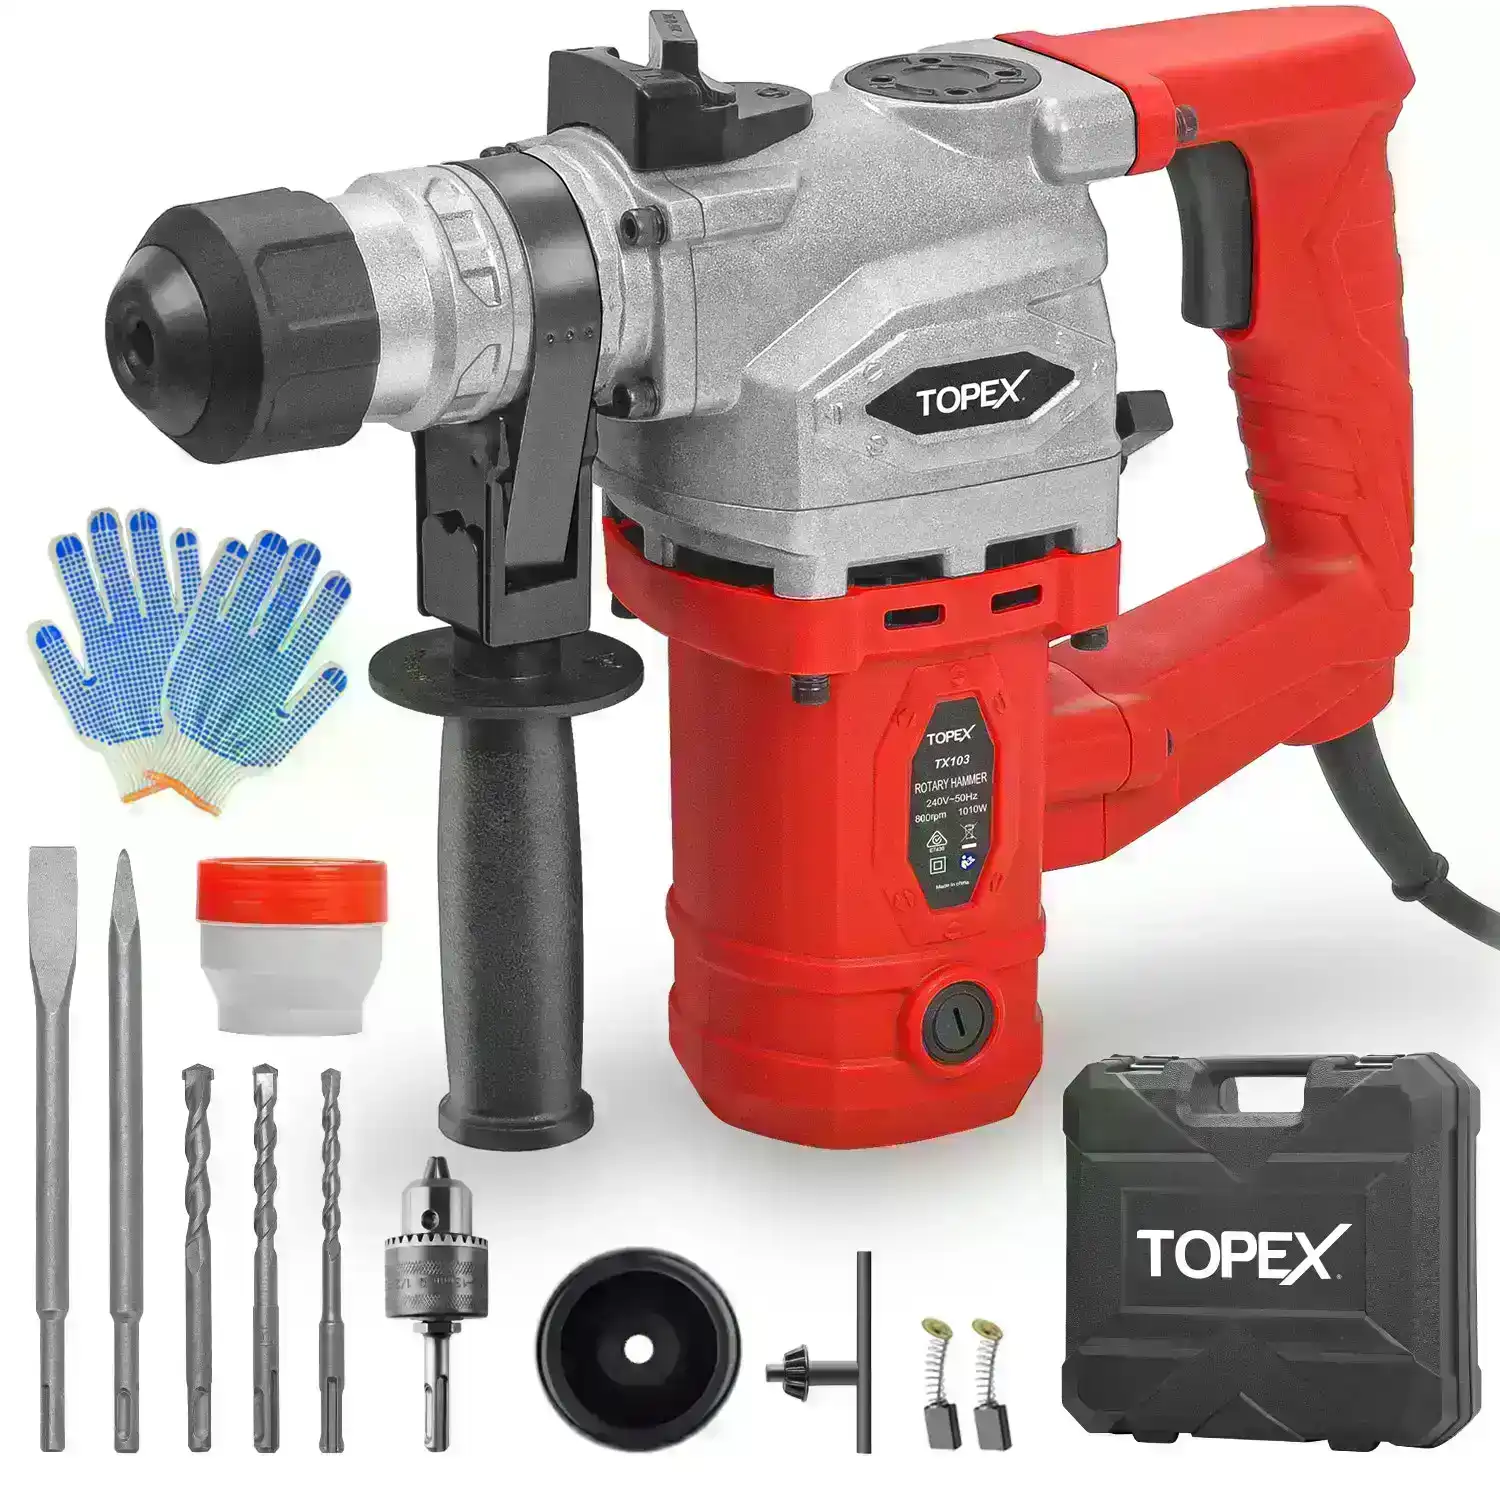 Topex 1010W SDS+ Rotary Hammer Drill Demolition Jack Hammer Kit w/ Chisels Drill